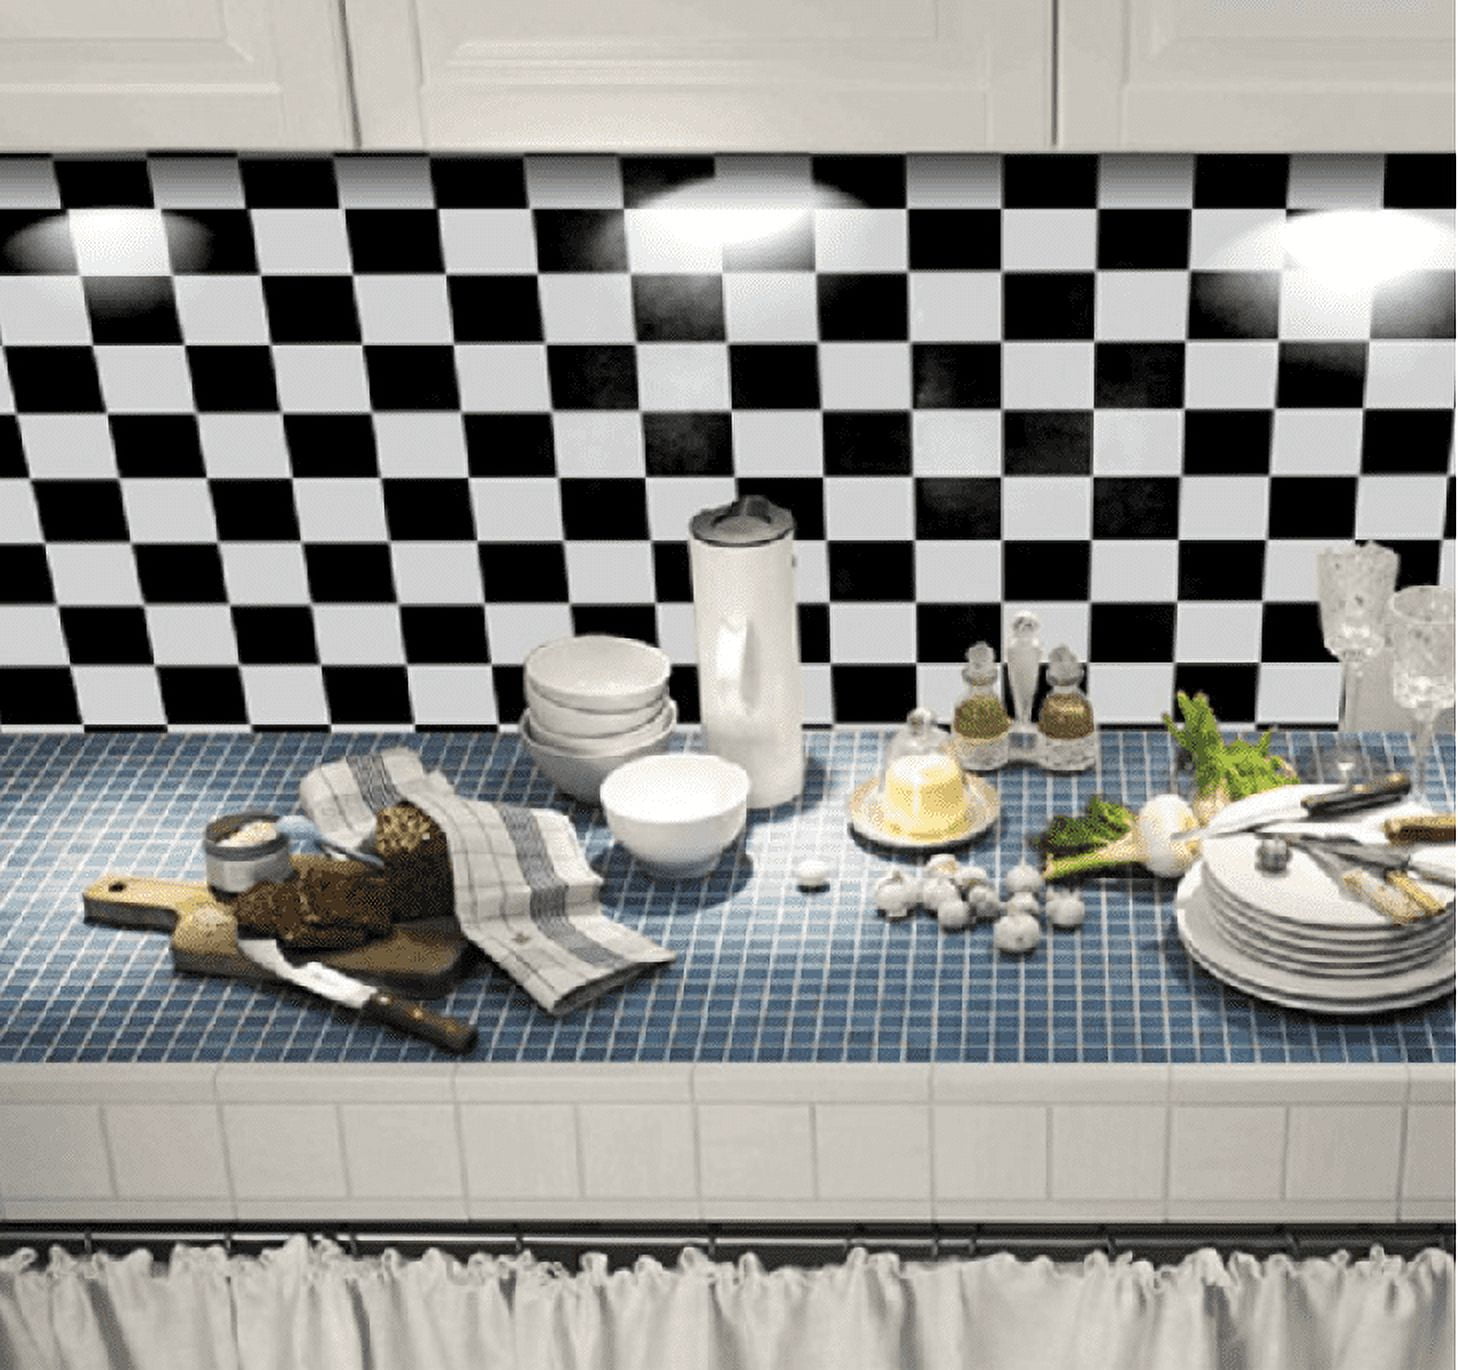 Decotalk Checkered Peel and Stick Wallpaper for Kitchen Backsplash